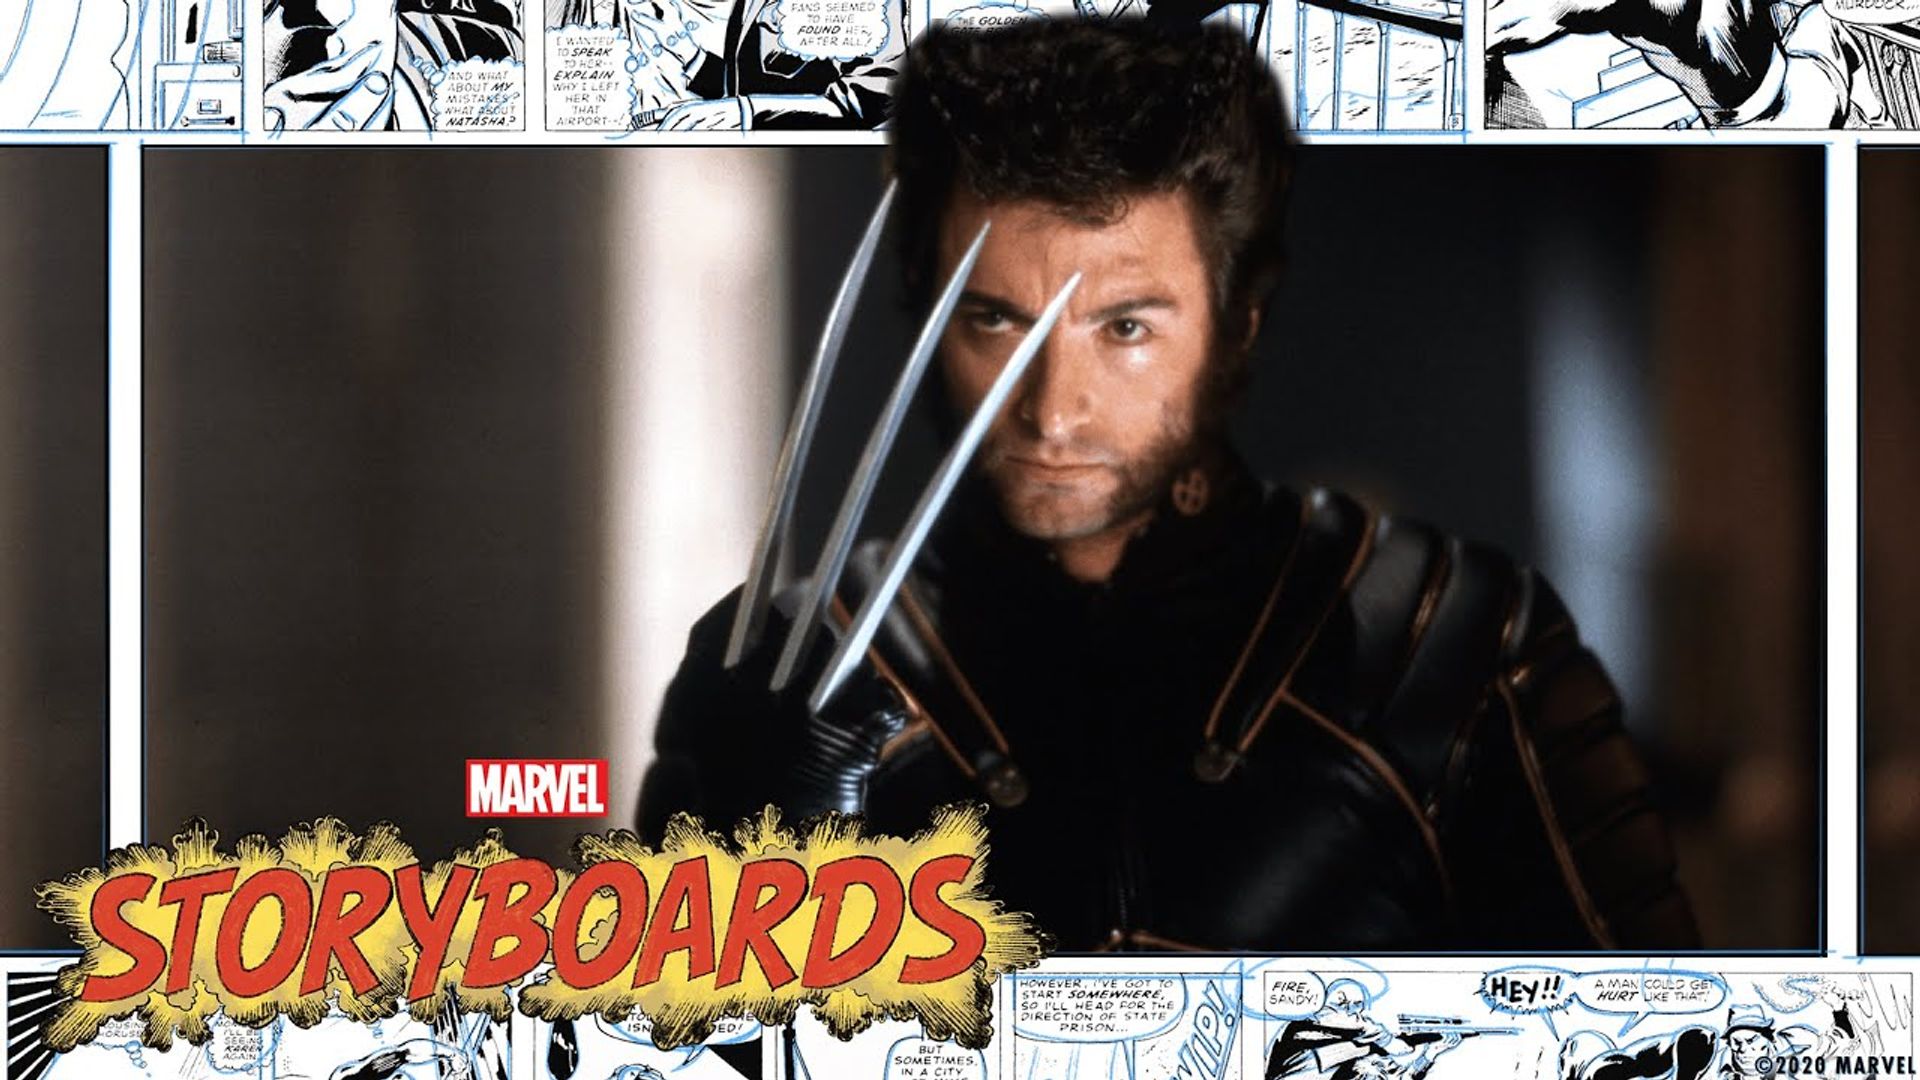 Marvel's Storyboards background